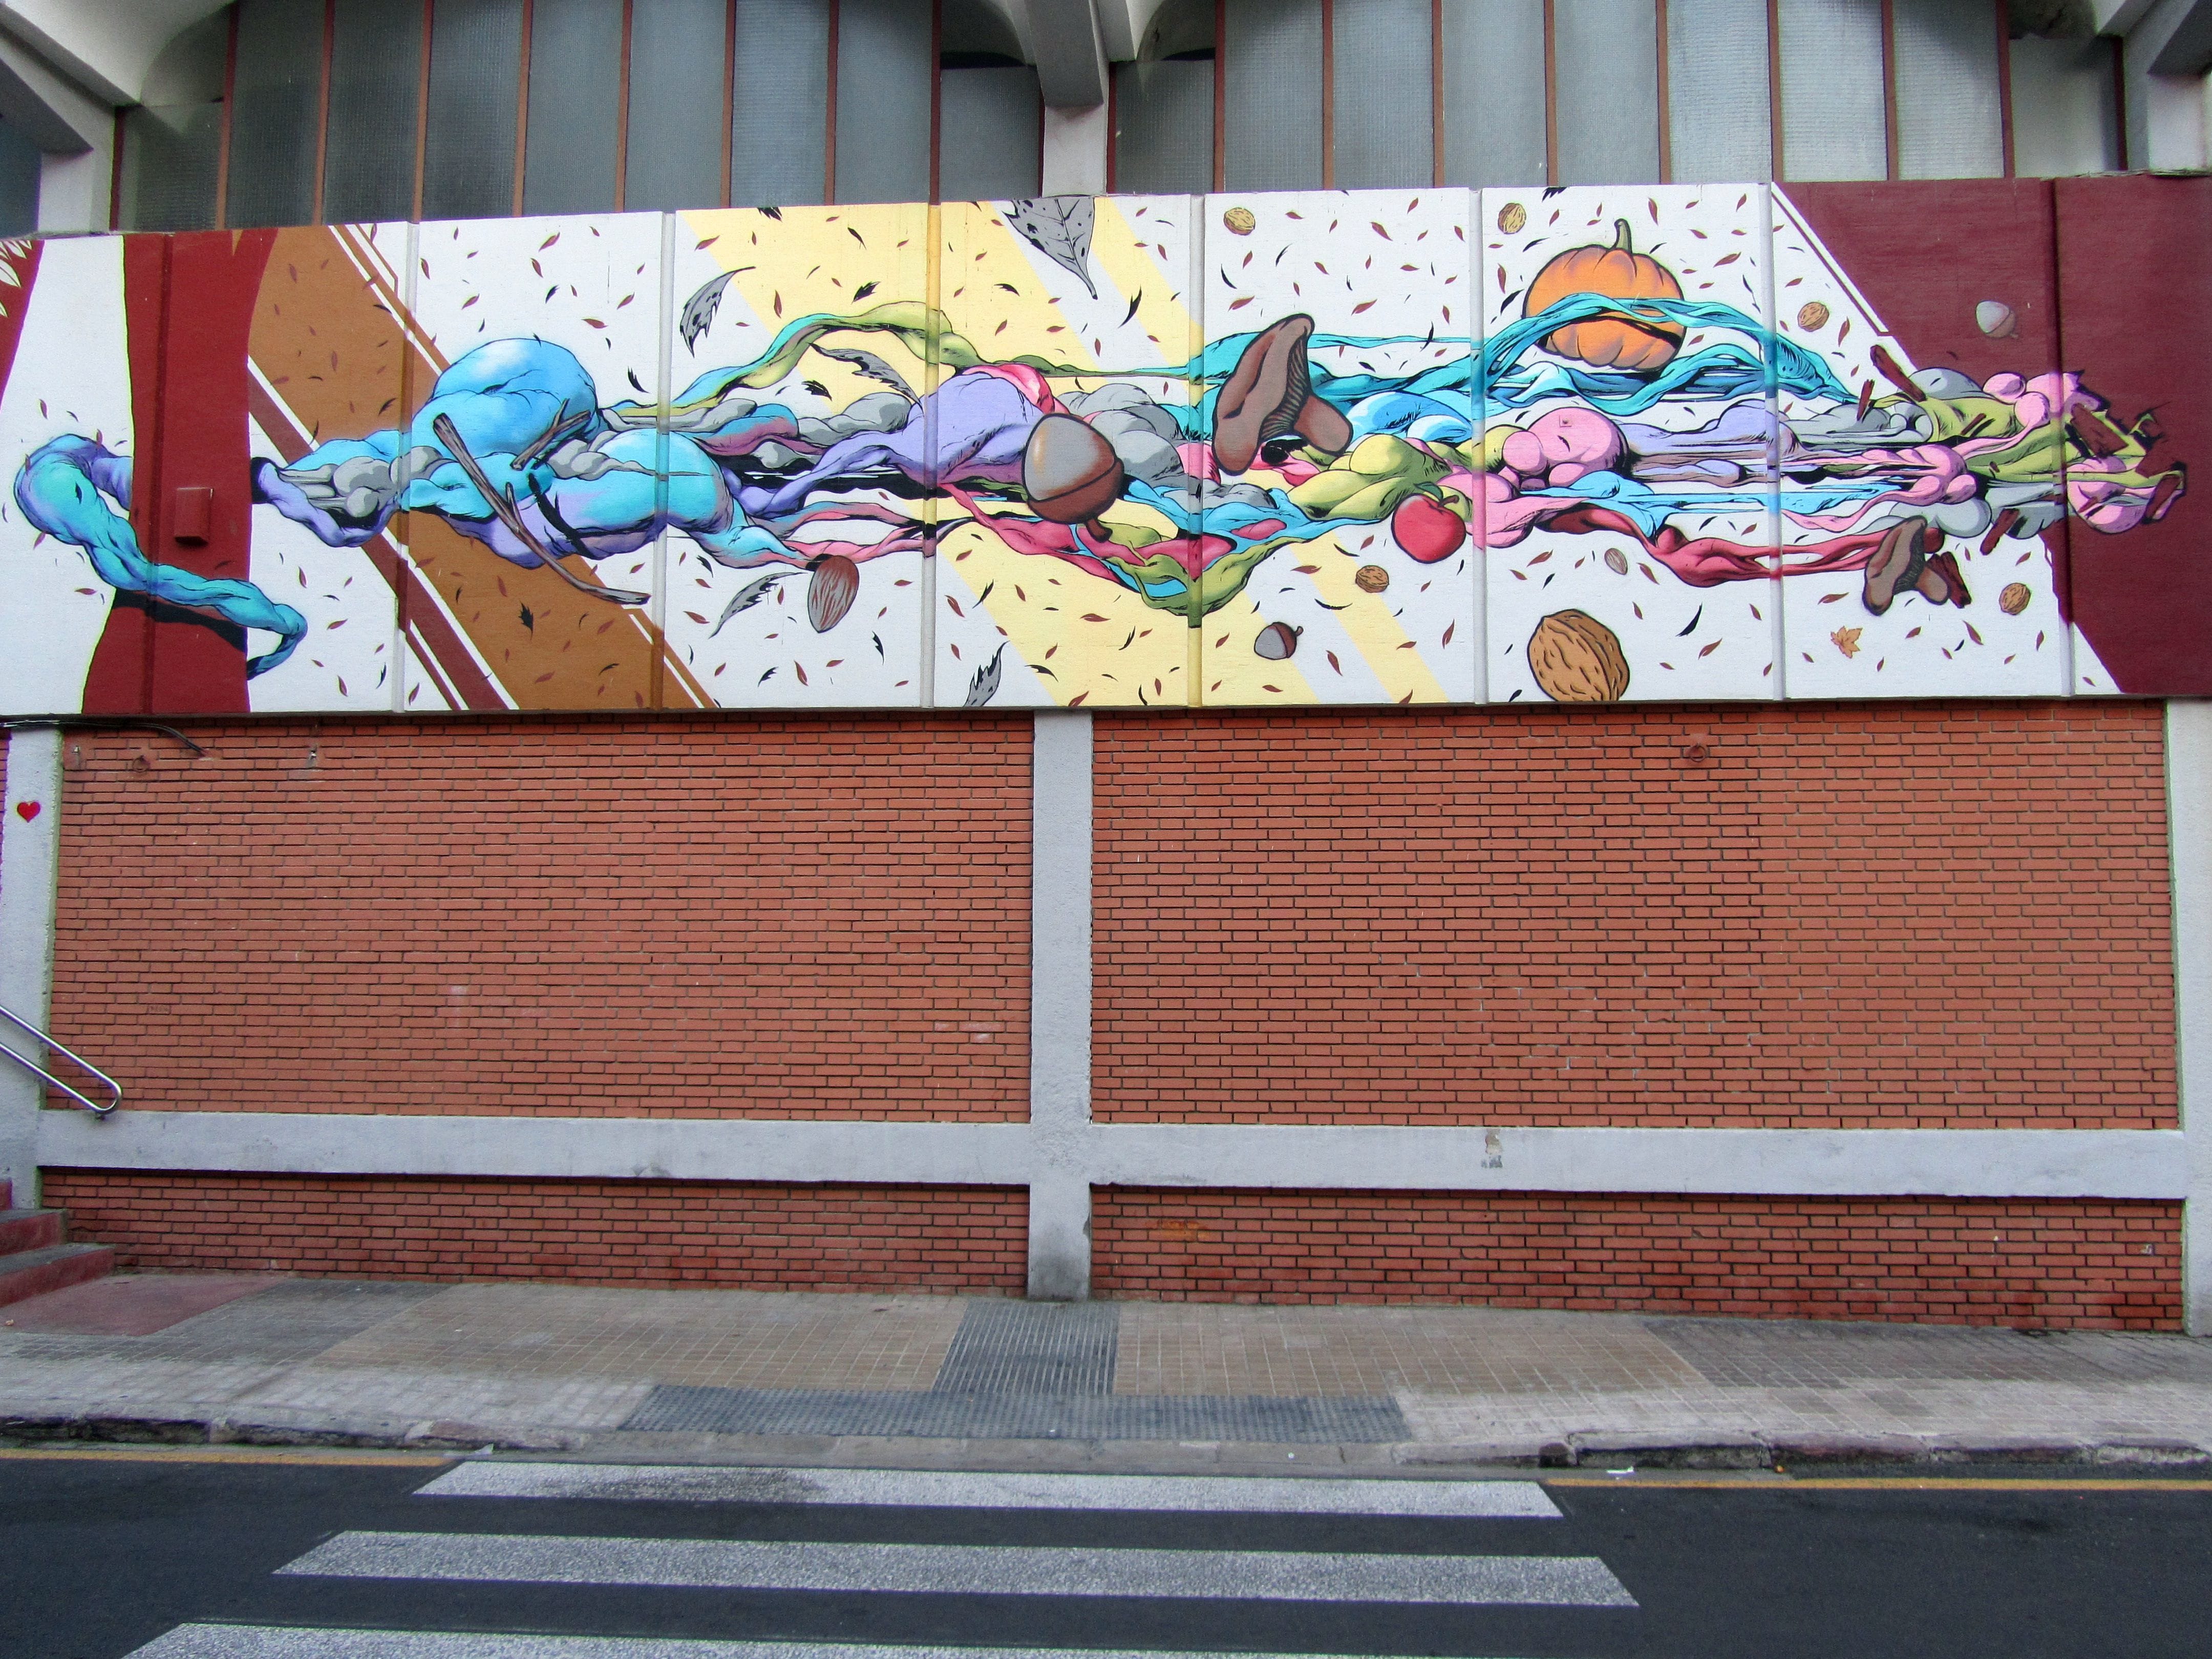 Graffiti 4802  by the artist Deih xlf captured by elettrotajik in València Spain